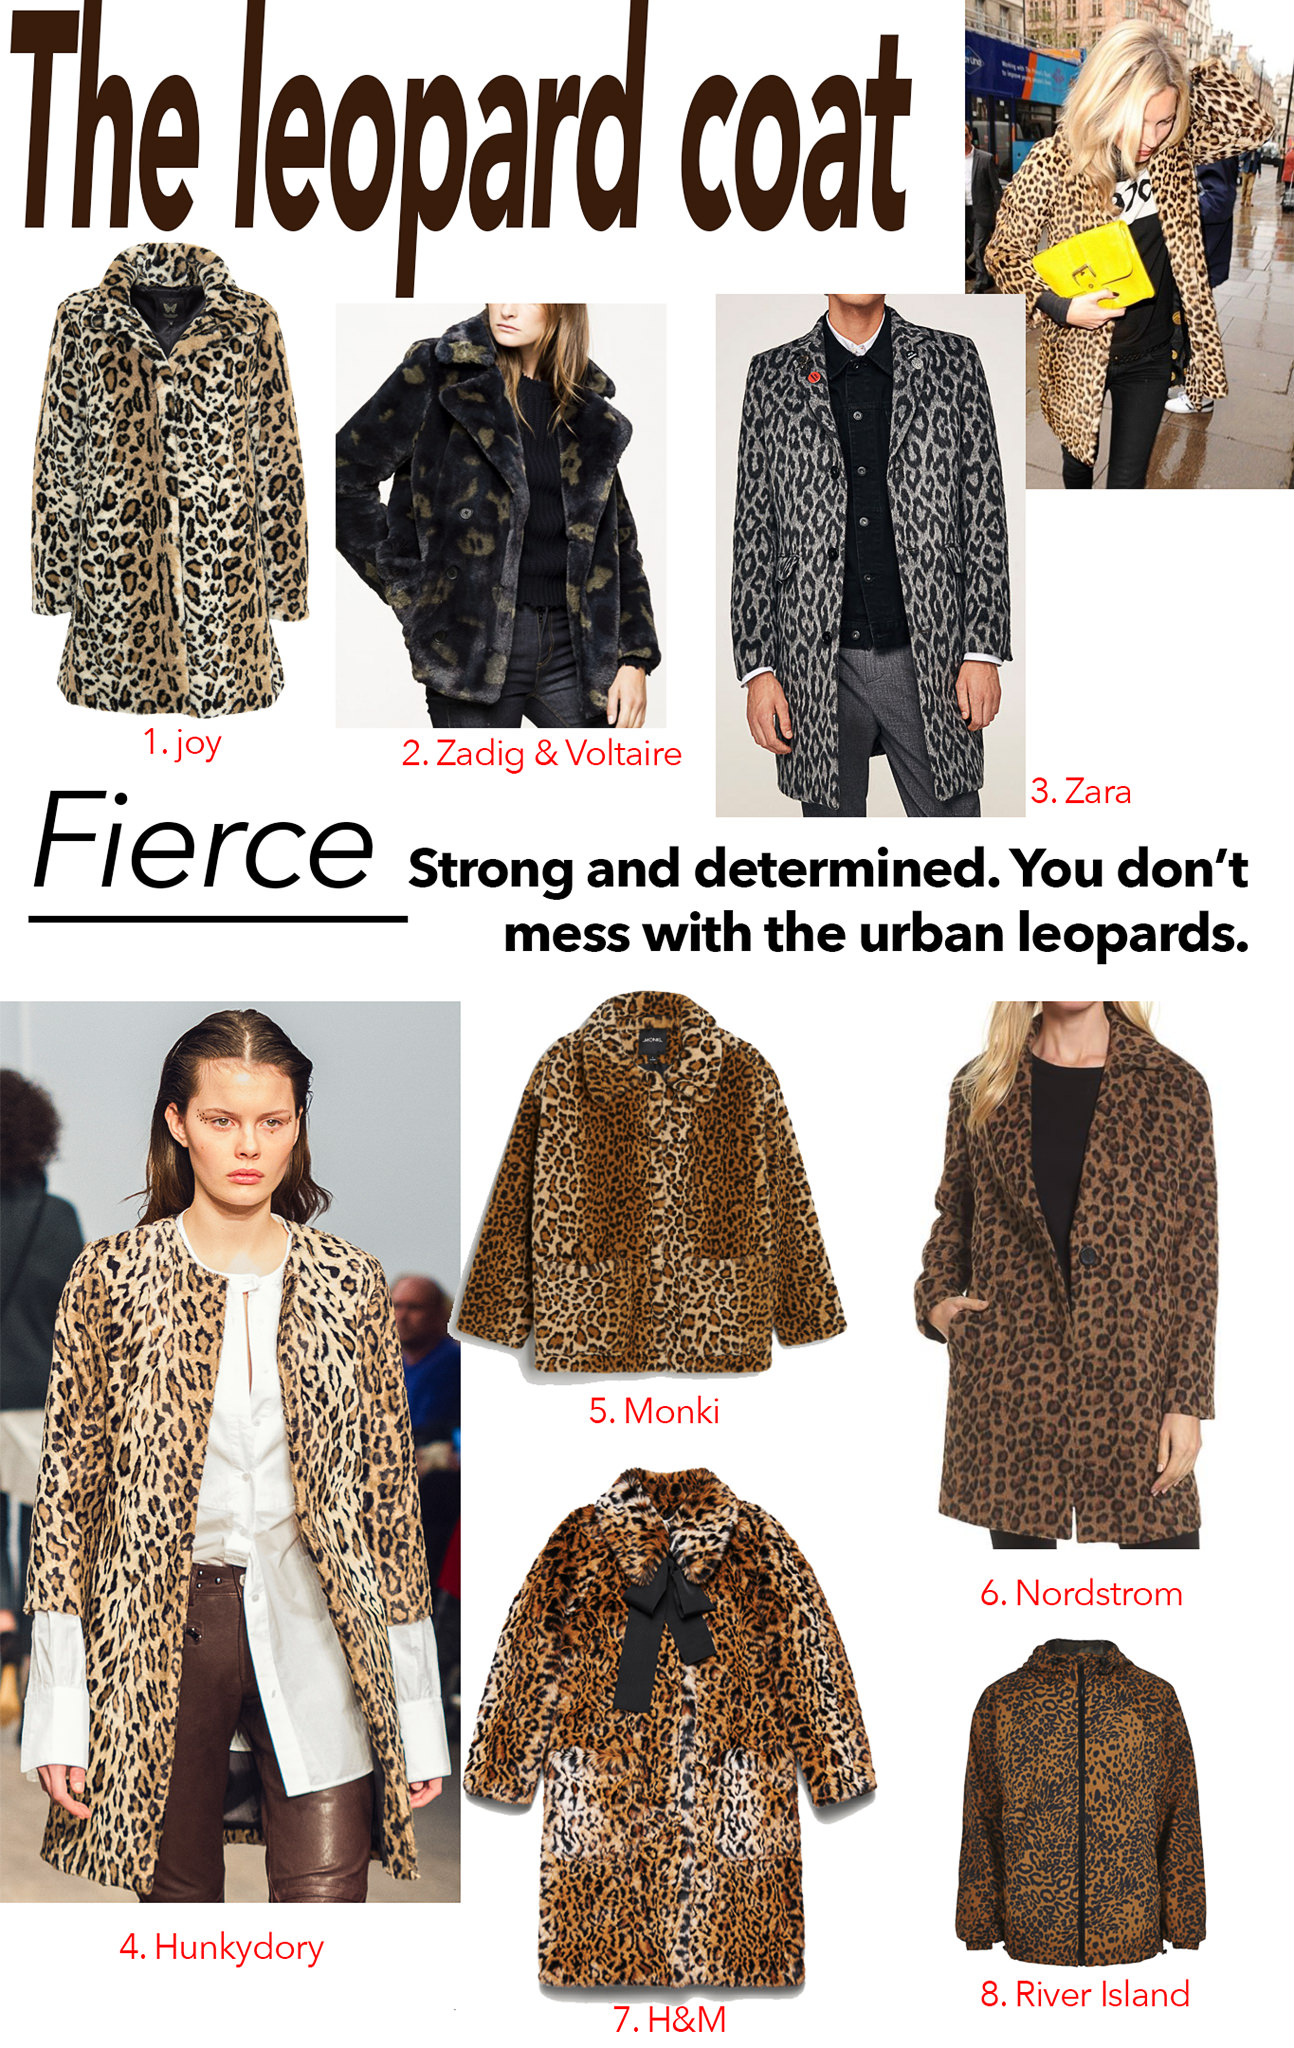 The leopard coat